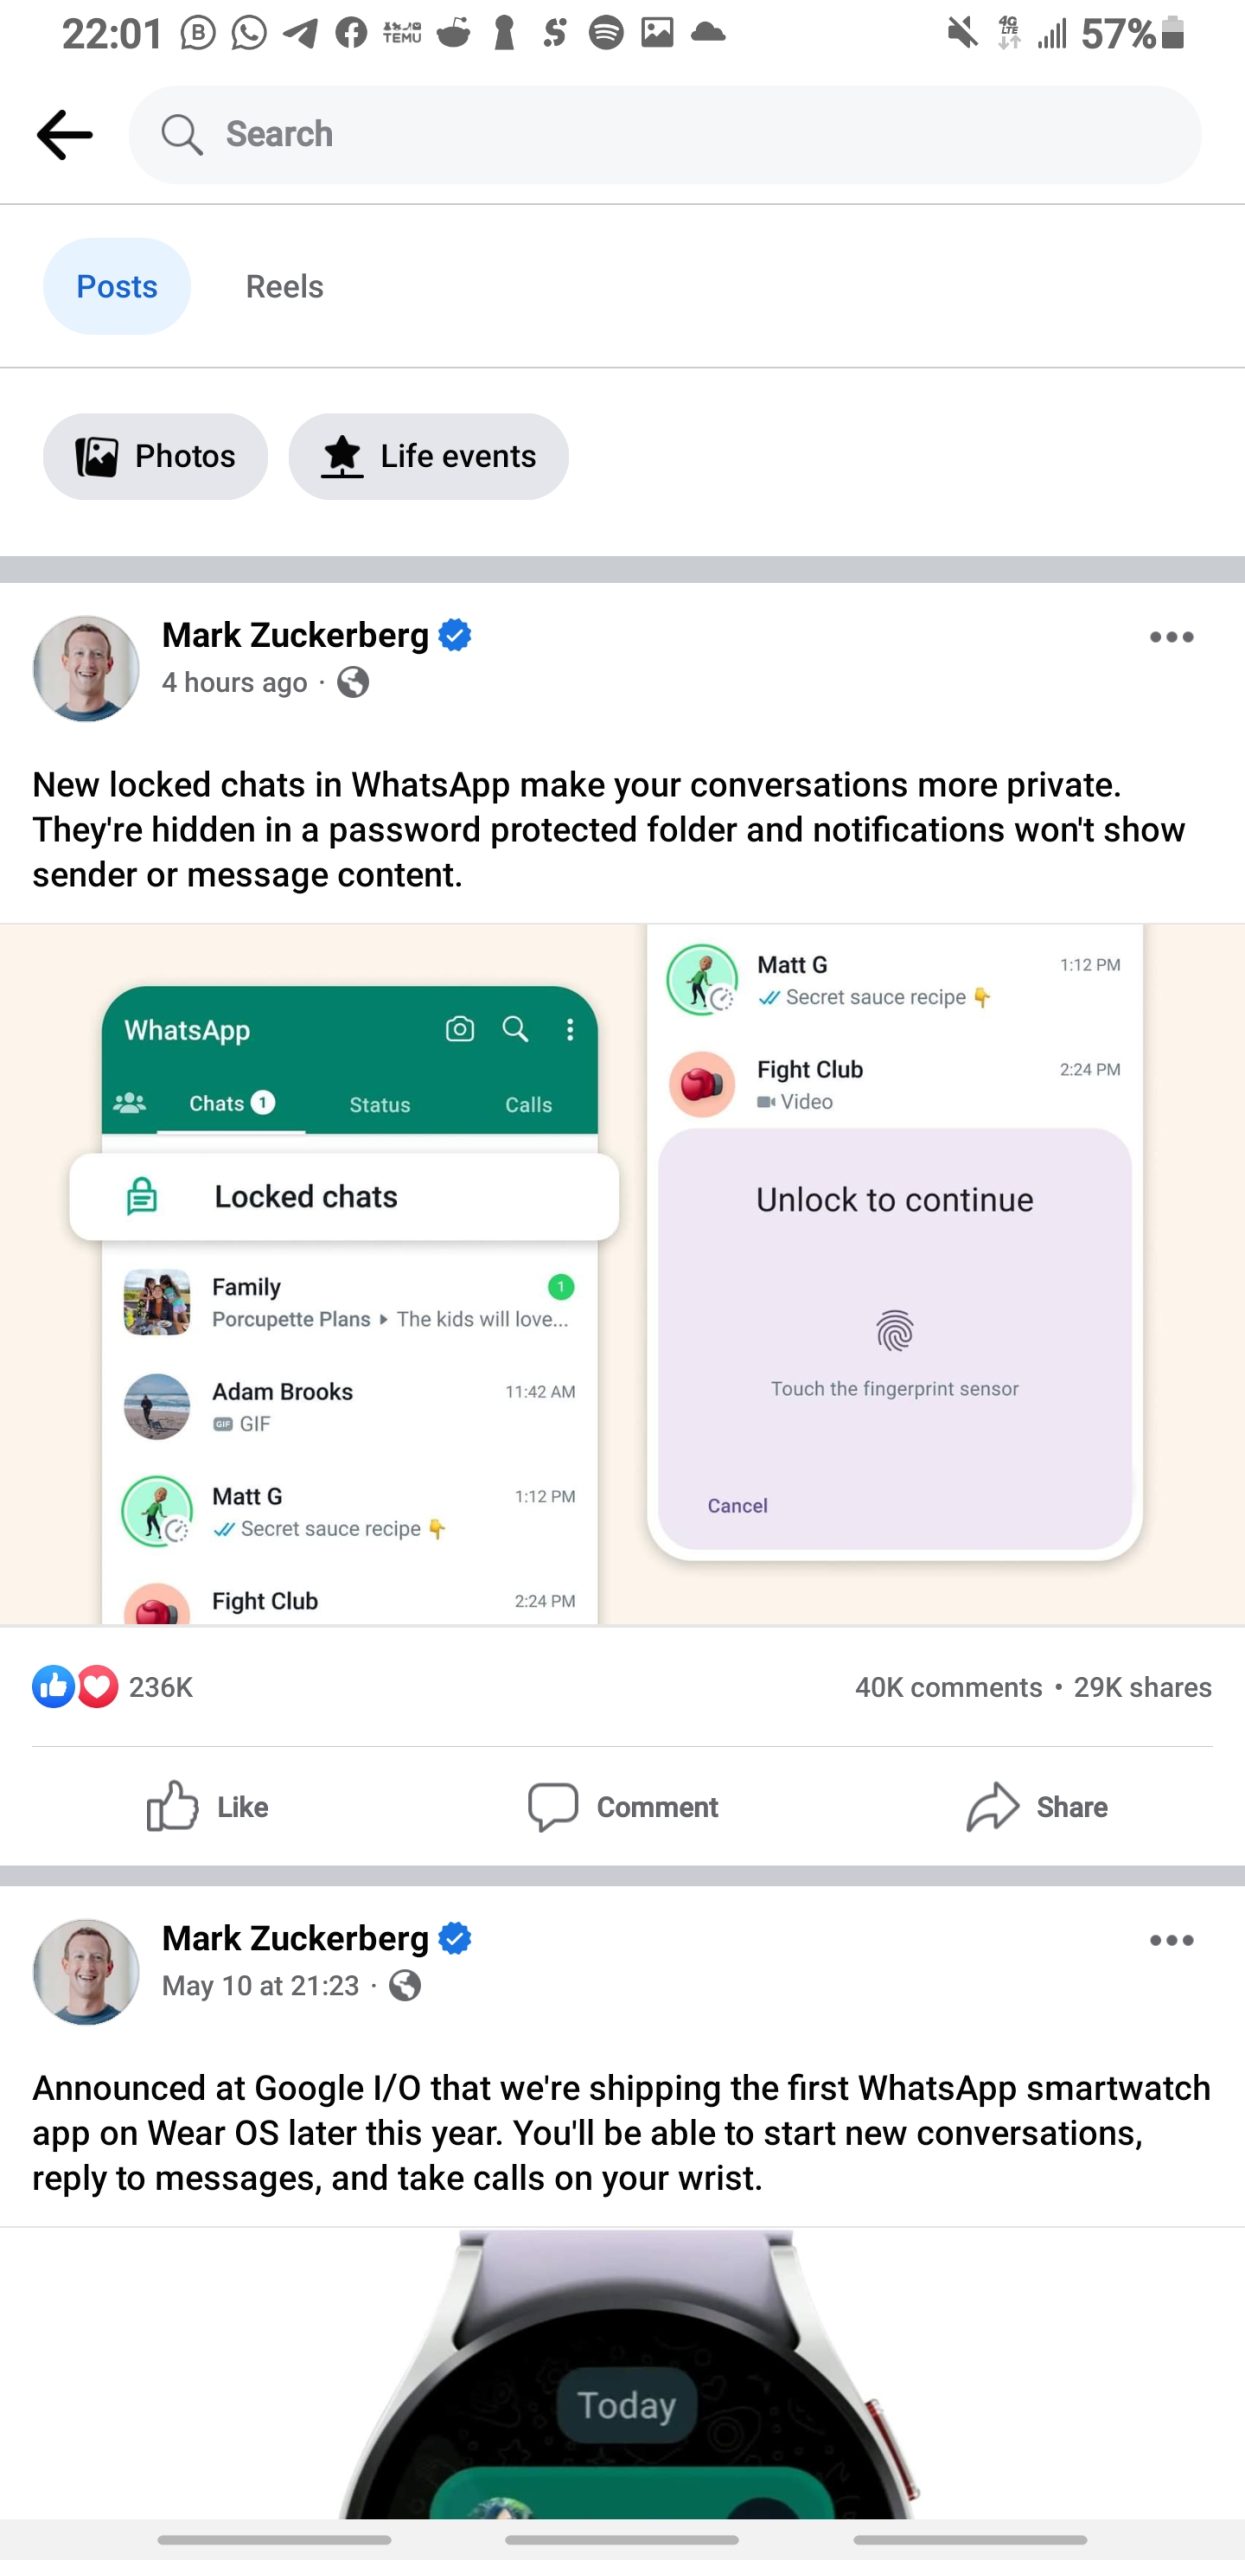 New WhatsApp update allows secret chat for users – Mark Zuckerberg reveals